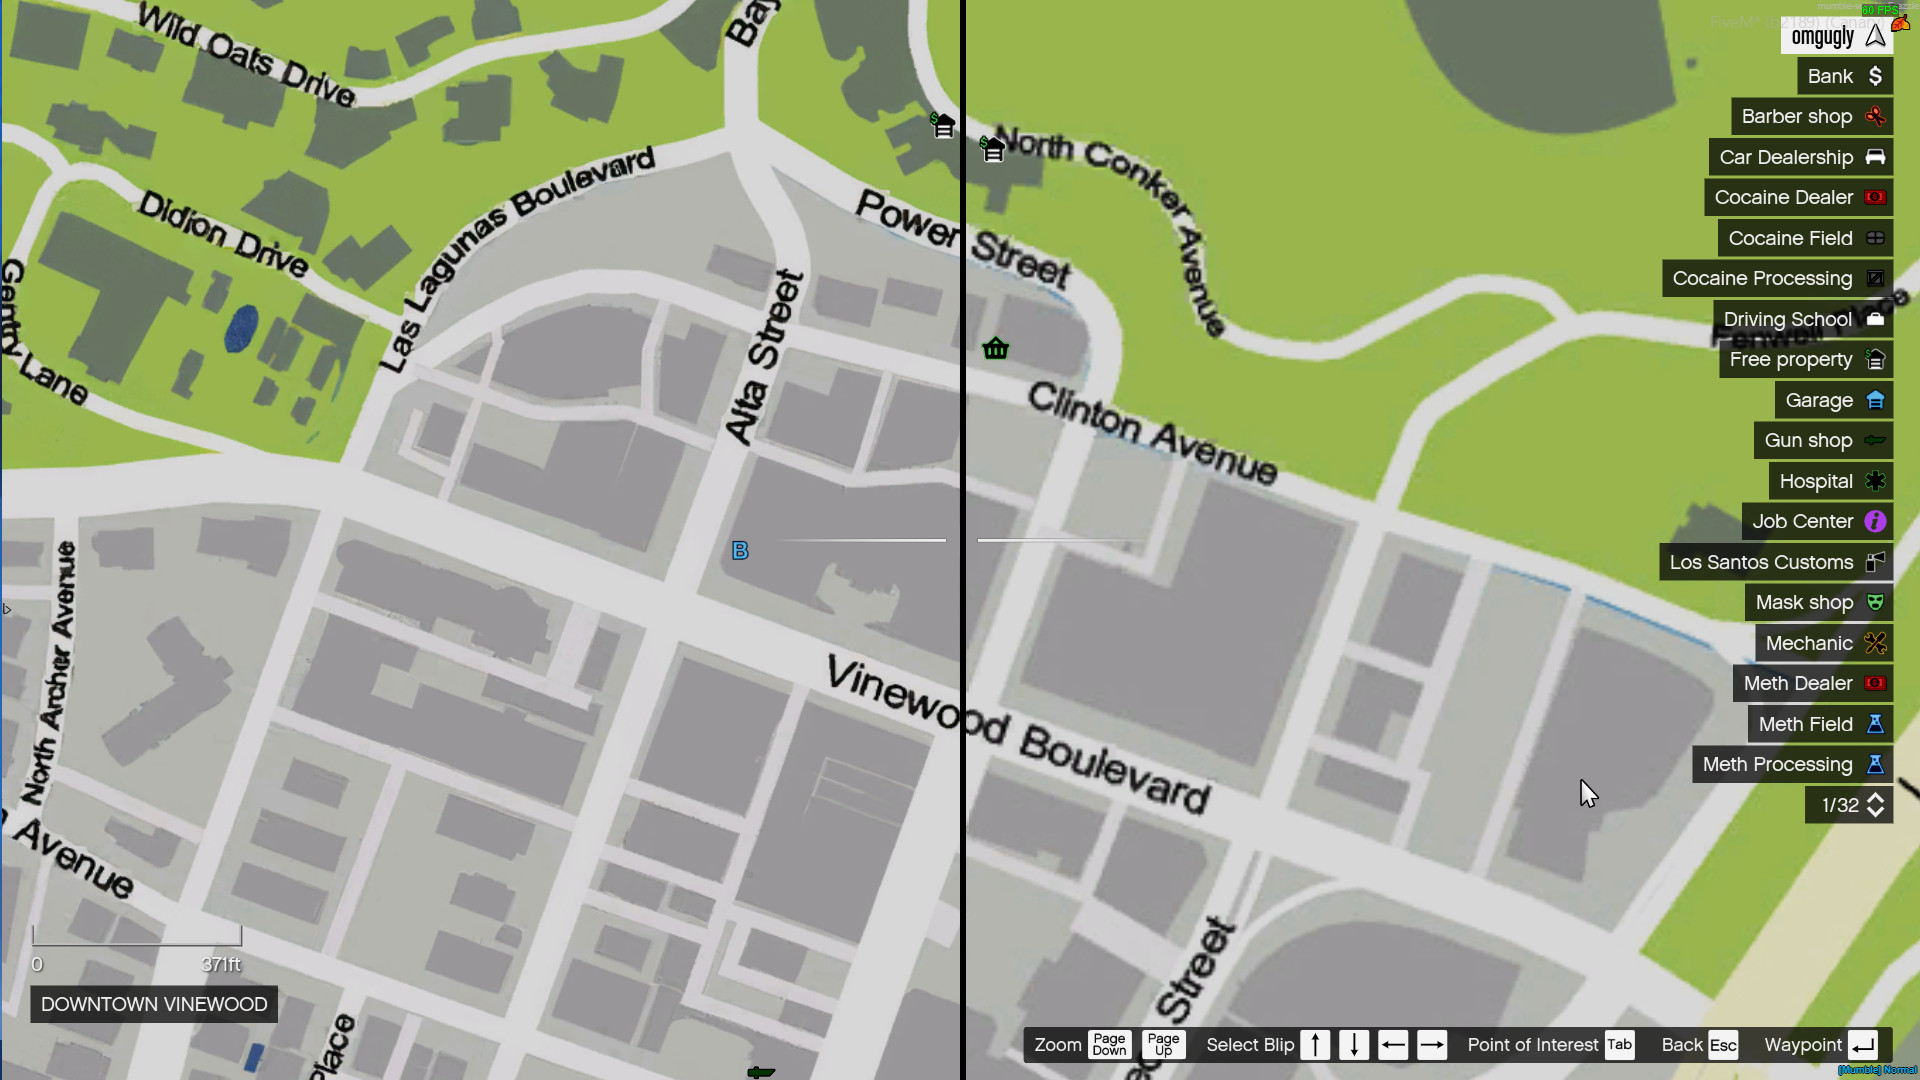 GTA 3 - Map Menu / Radar in Pause Menu (Mod) 